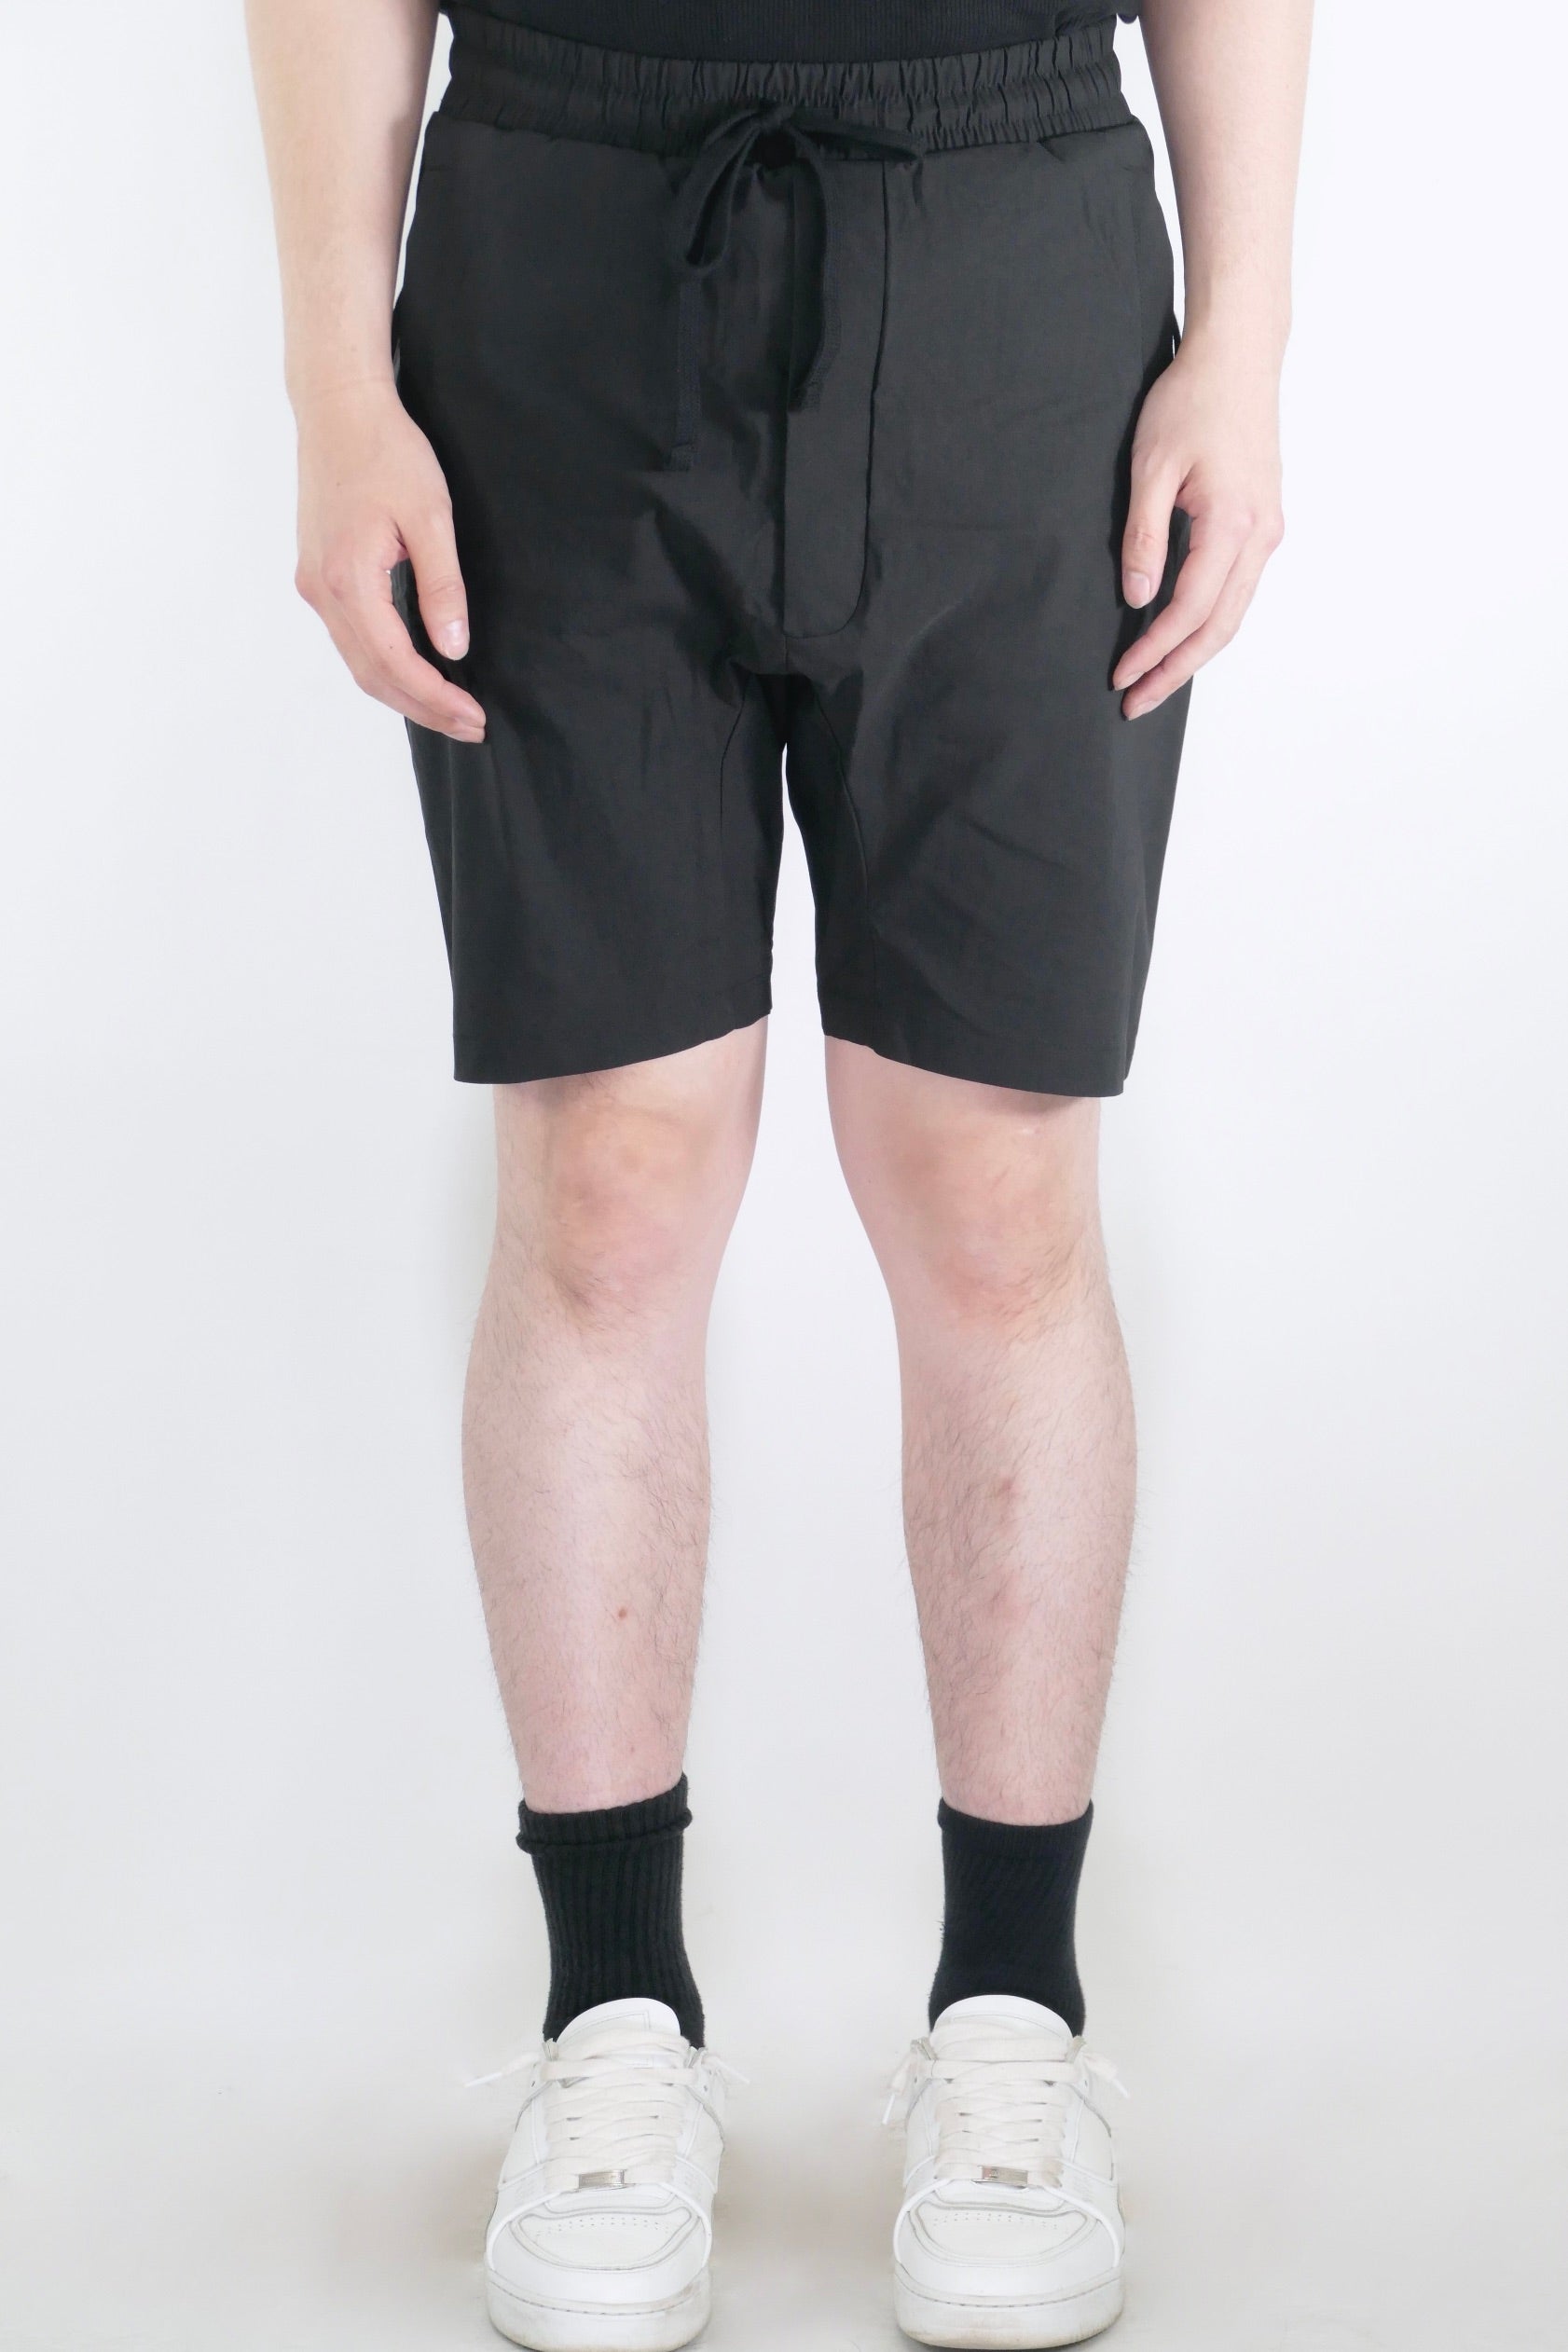 thom/krom M ST 355 Drop Crotch Drawstring Shorts - Black S / Black